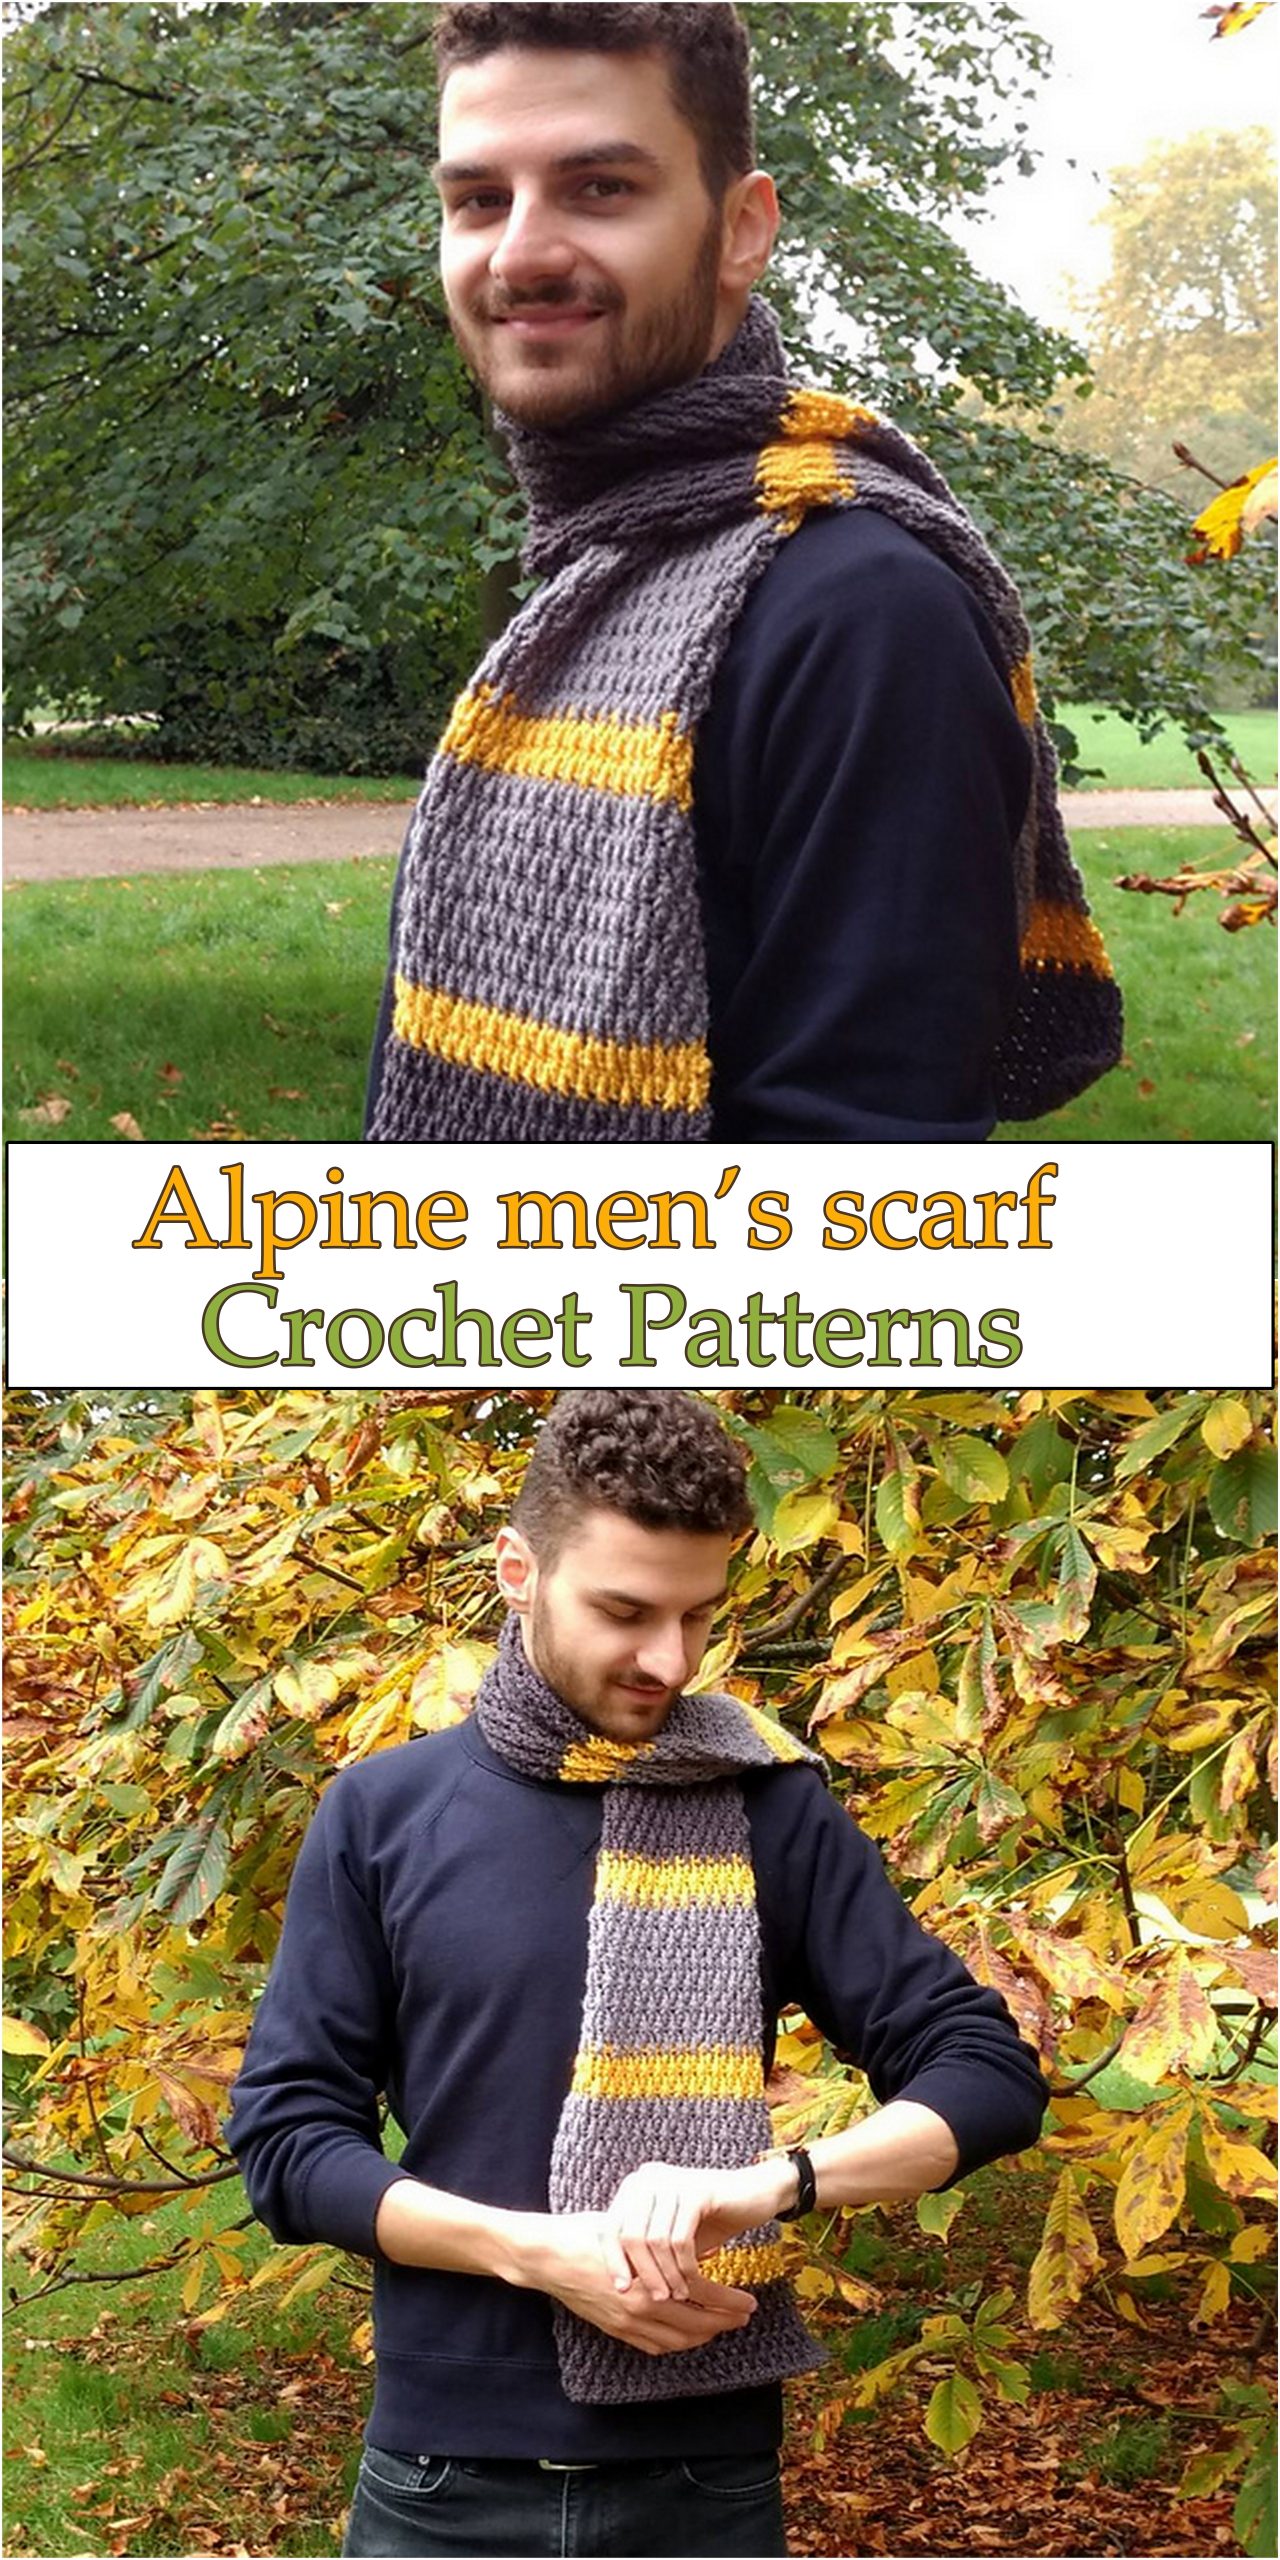 Alpine men’s scarf